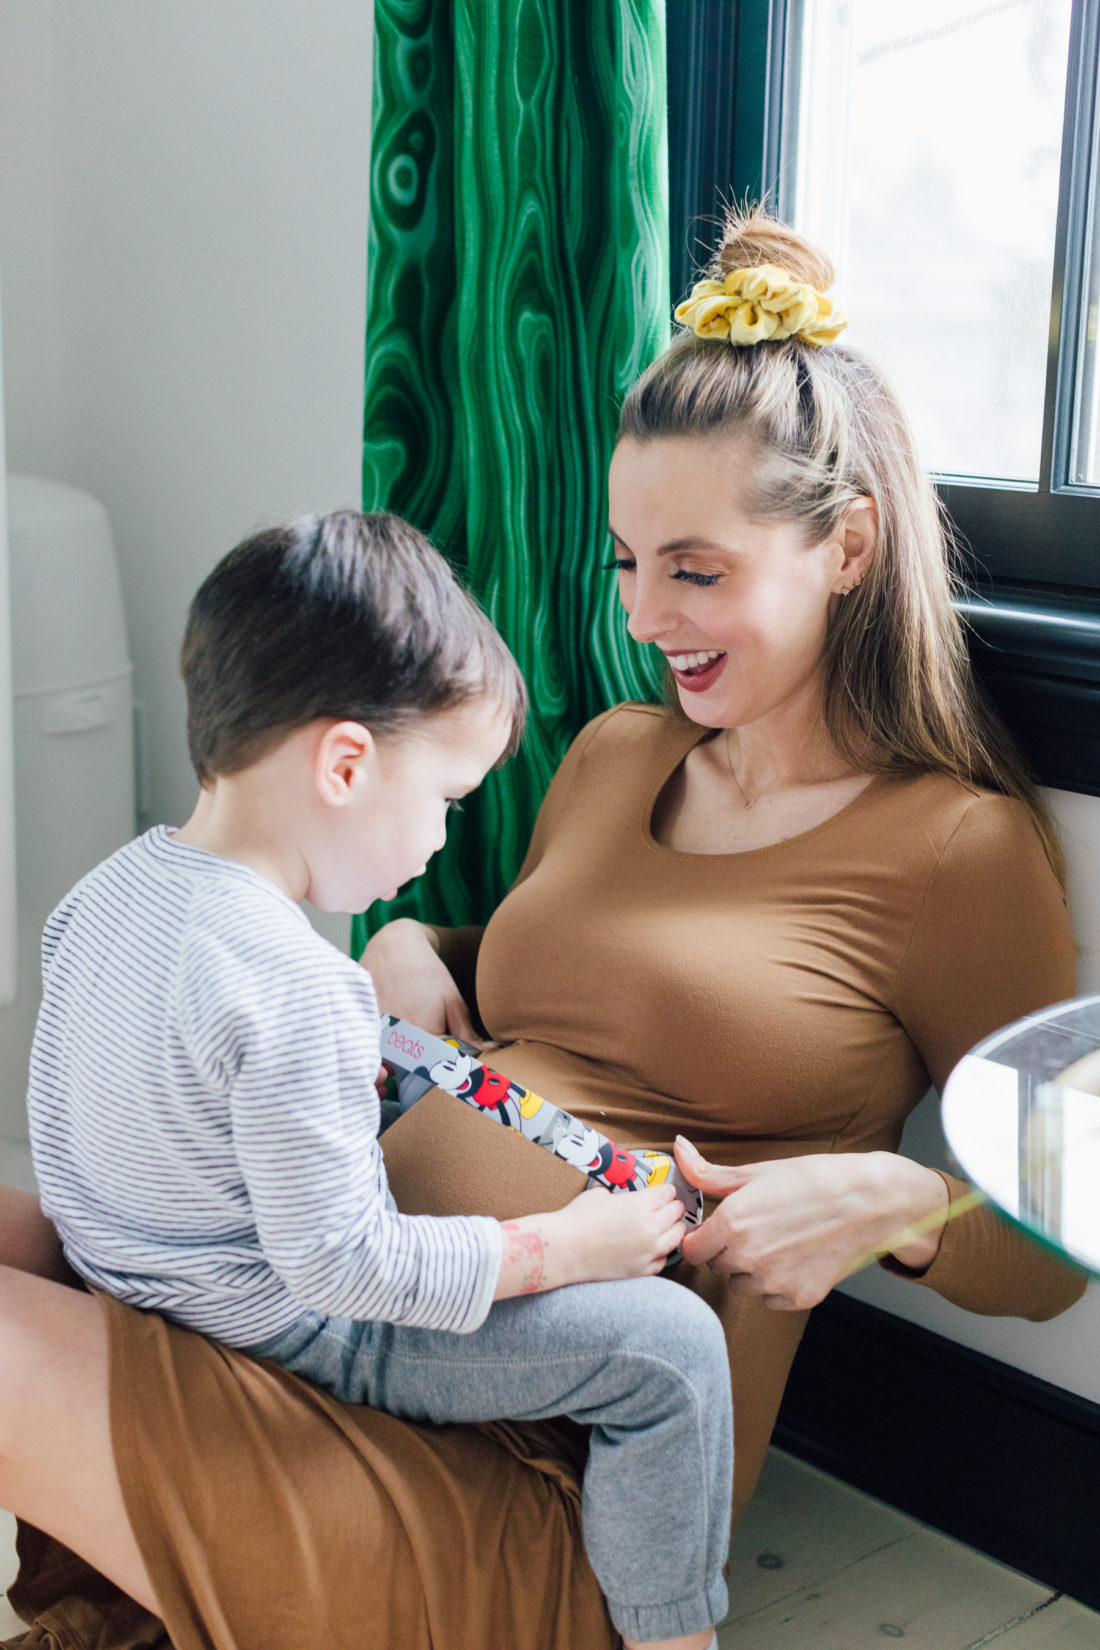 Blogger Eva Amurri discusses how she's preparing for baby #3